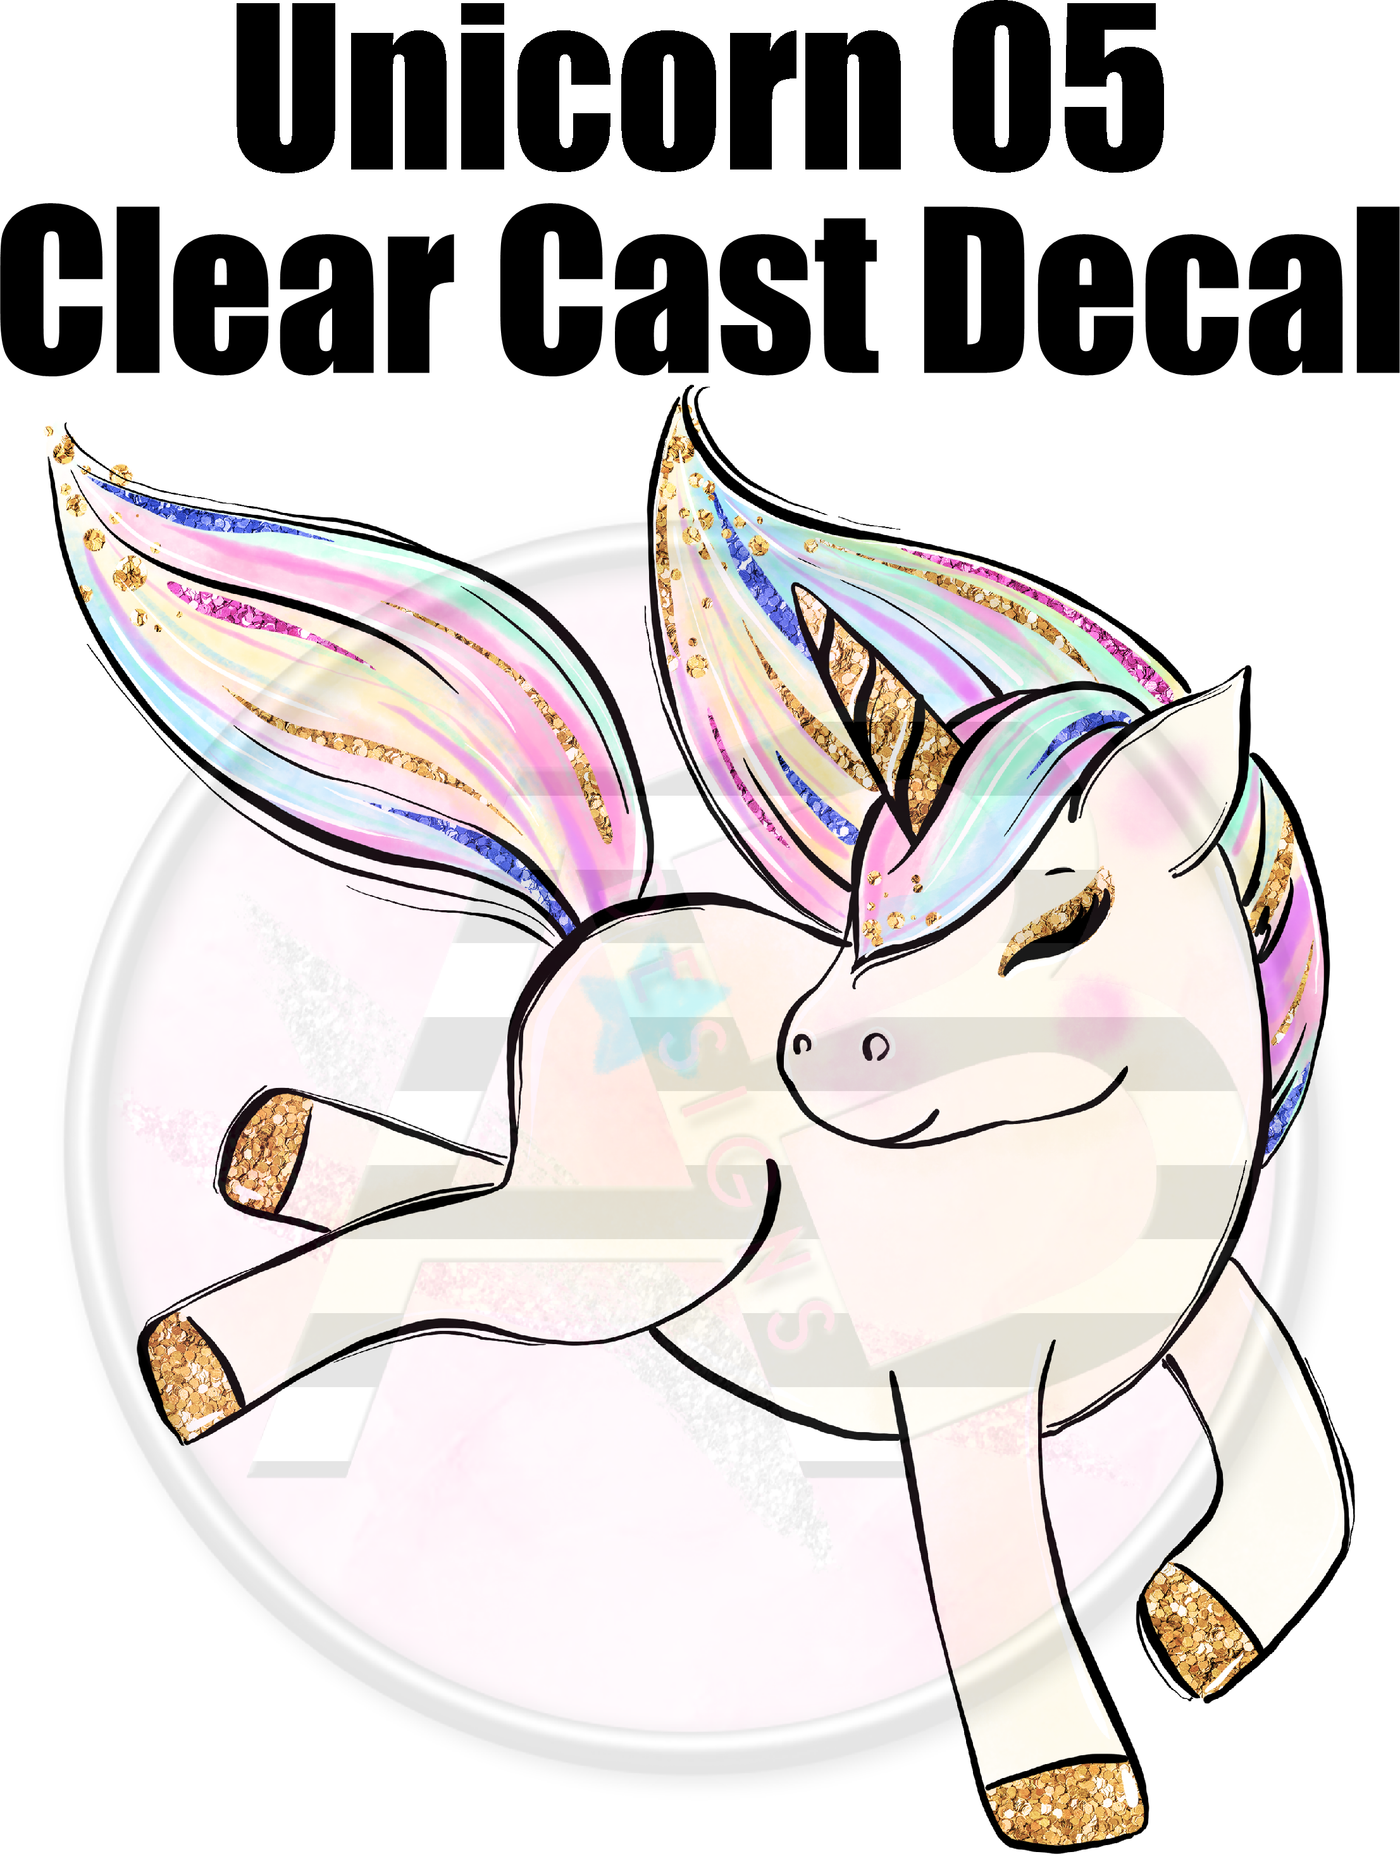 Unicorn 05 - Clear Cast Decal